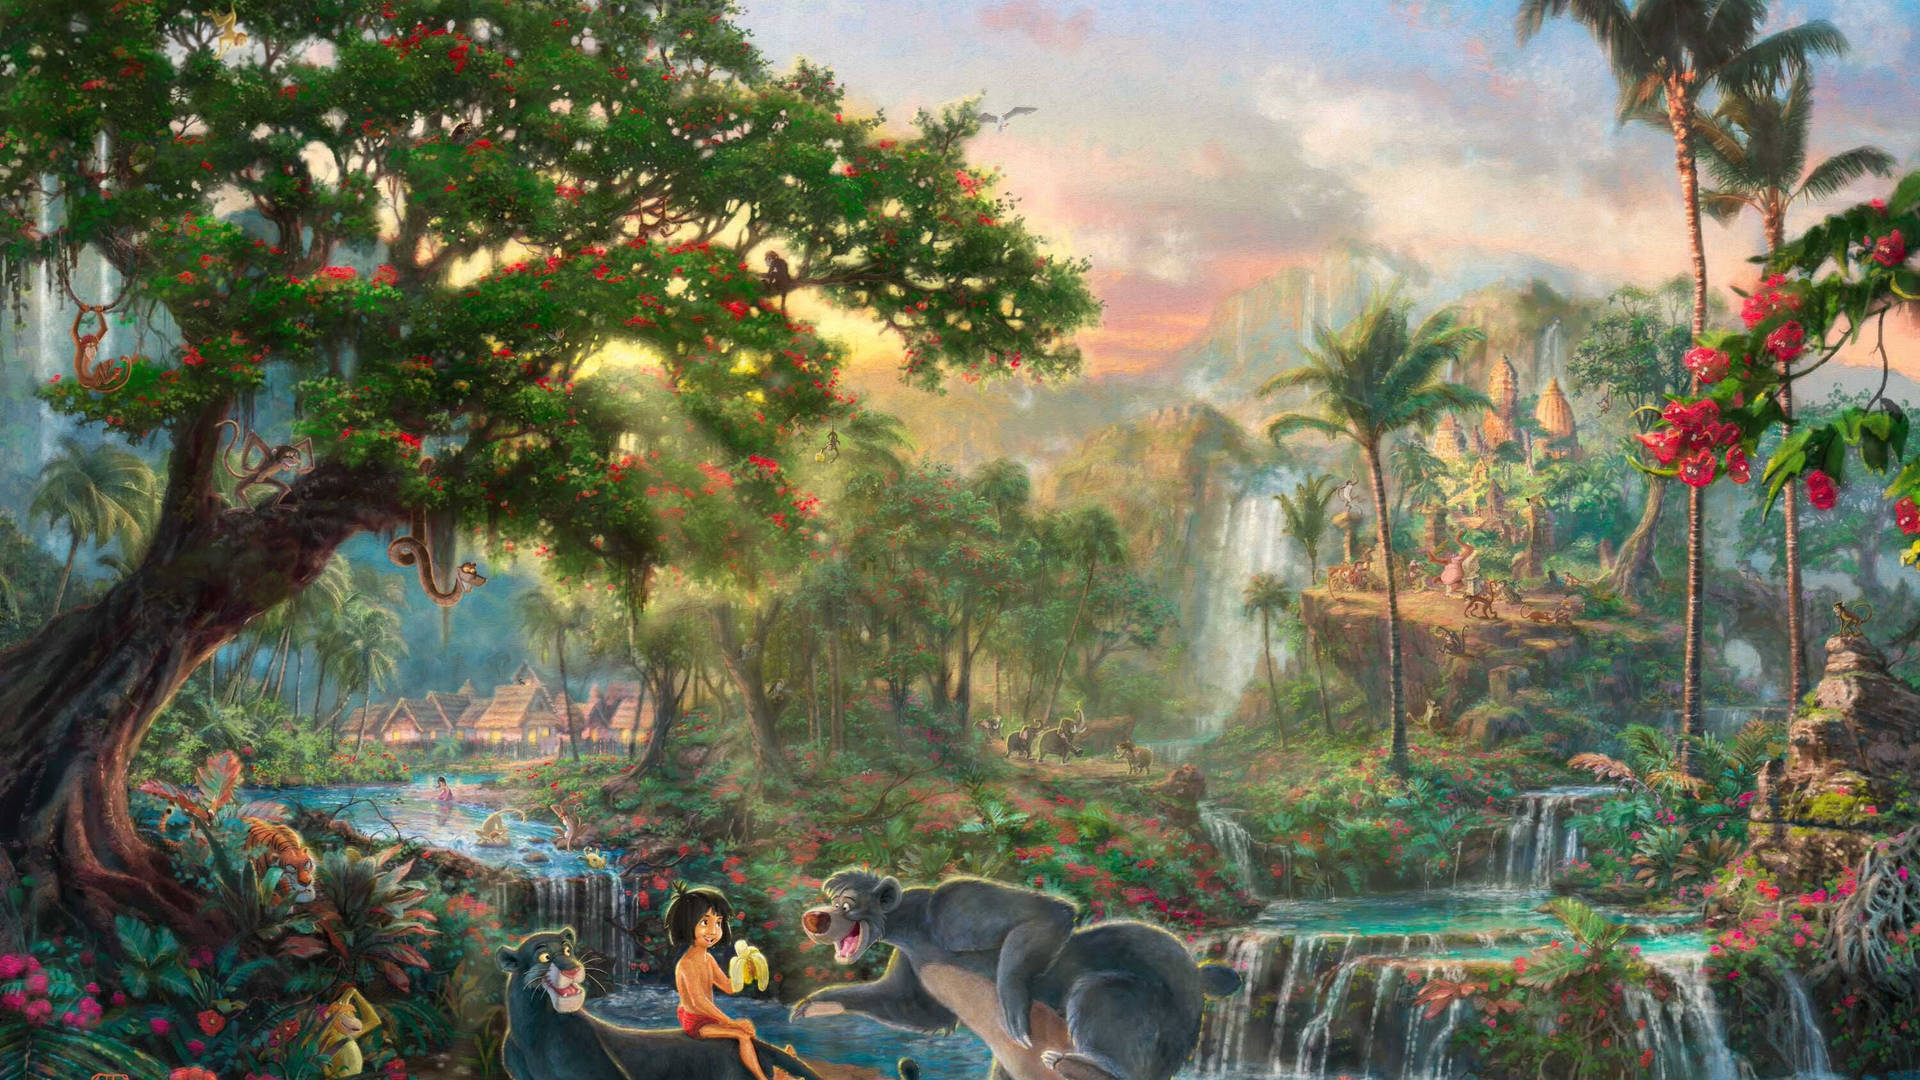 2560x1440 Disney The Jungle Book Background